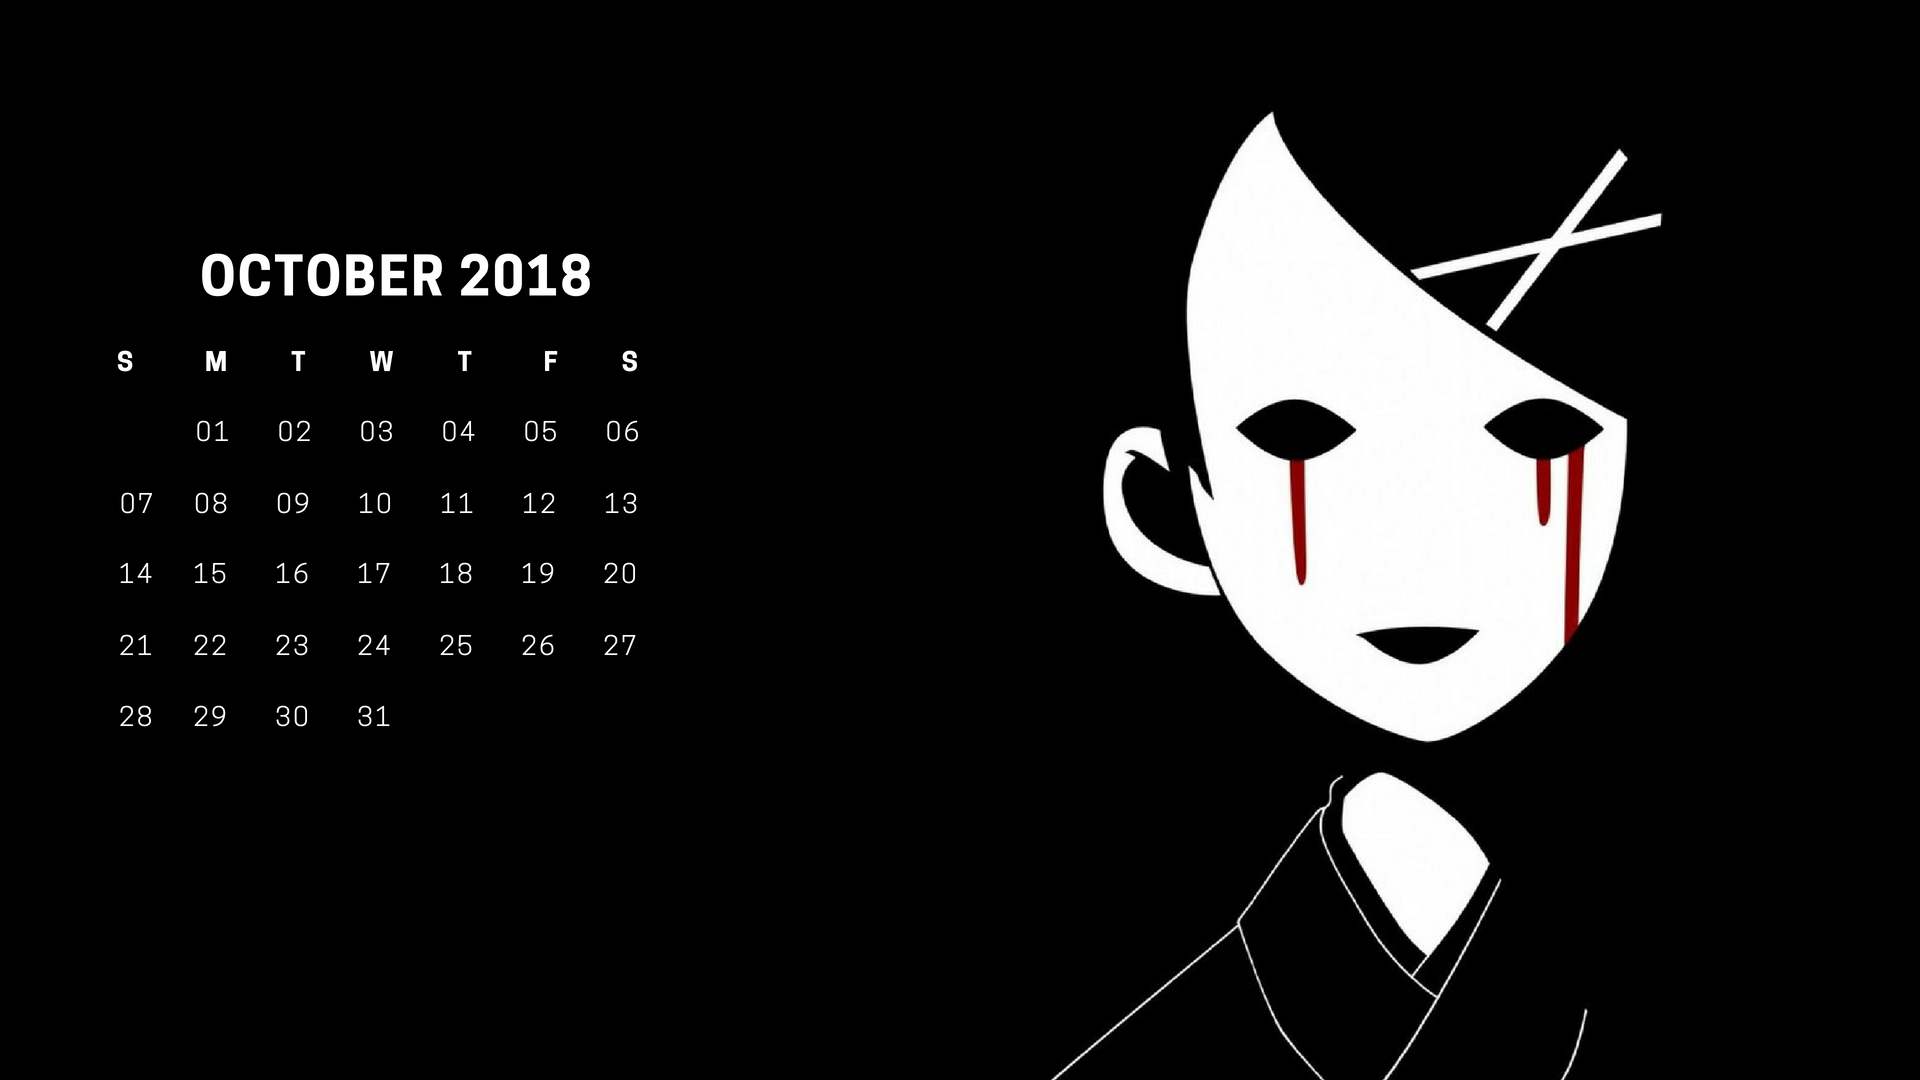 October 2018 Calendar Wallpaper for Desktop